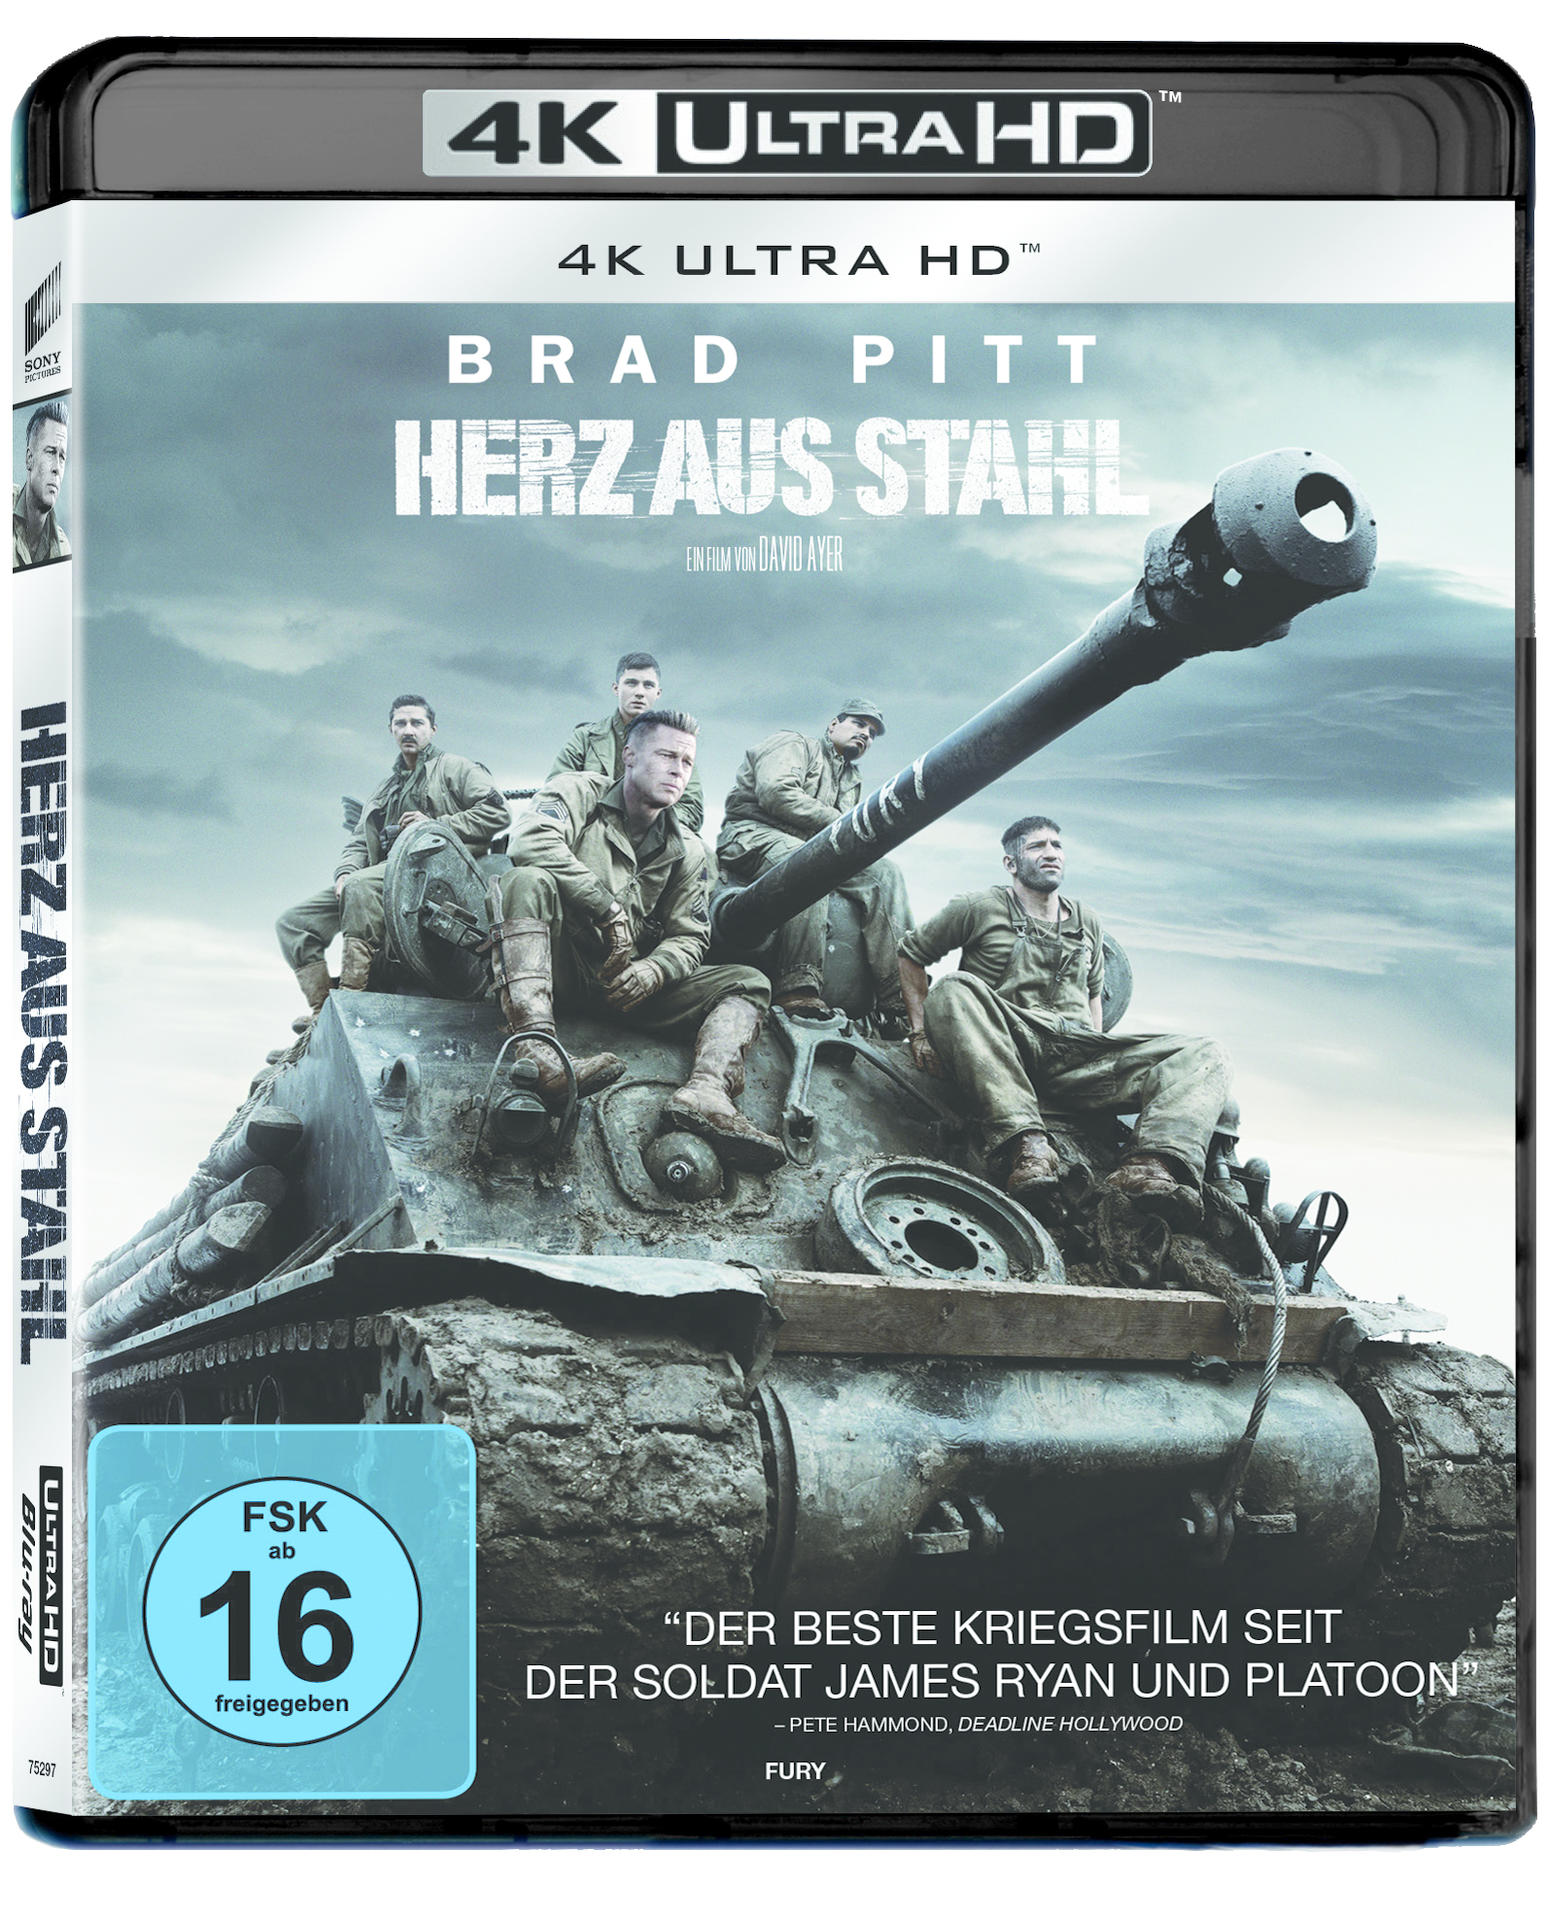 HD HERZ 4K Blu-ray AUS STAHL Ultra